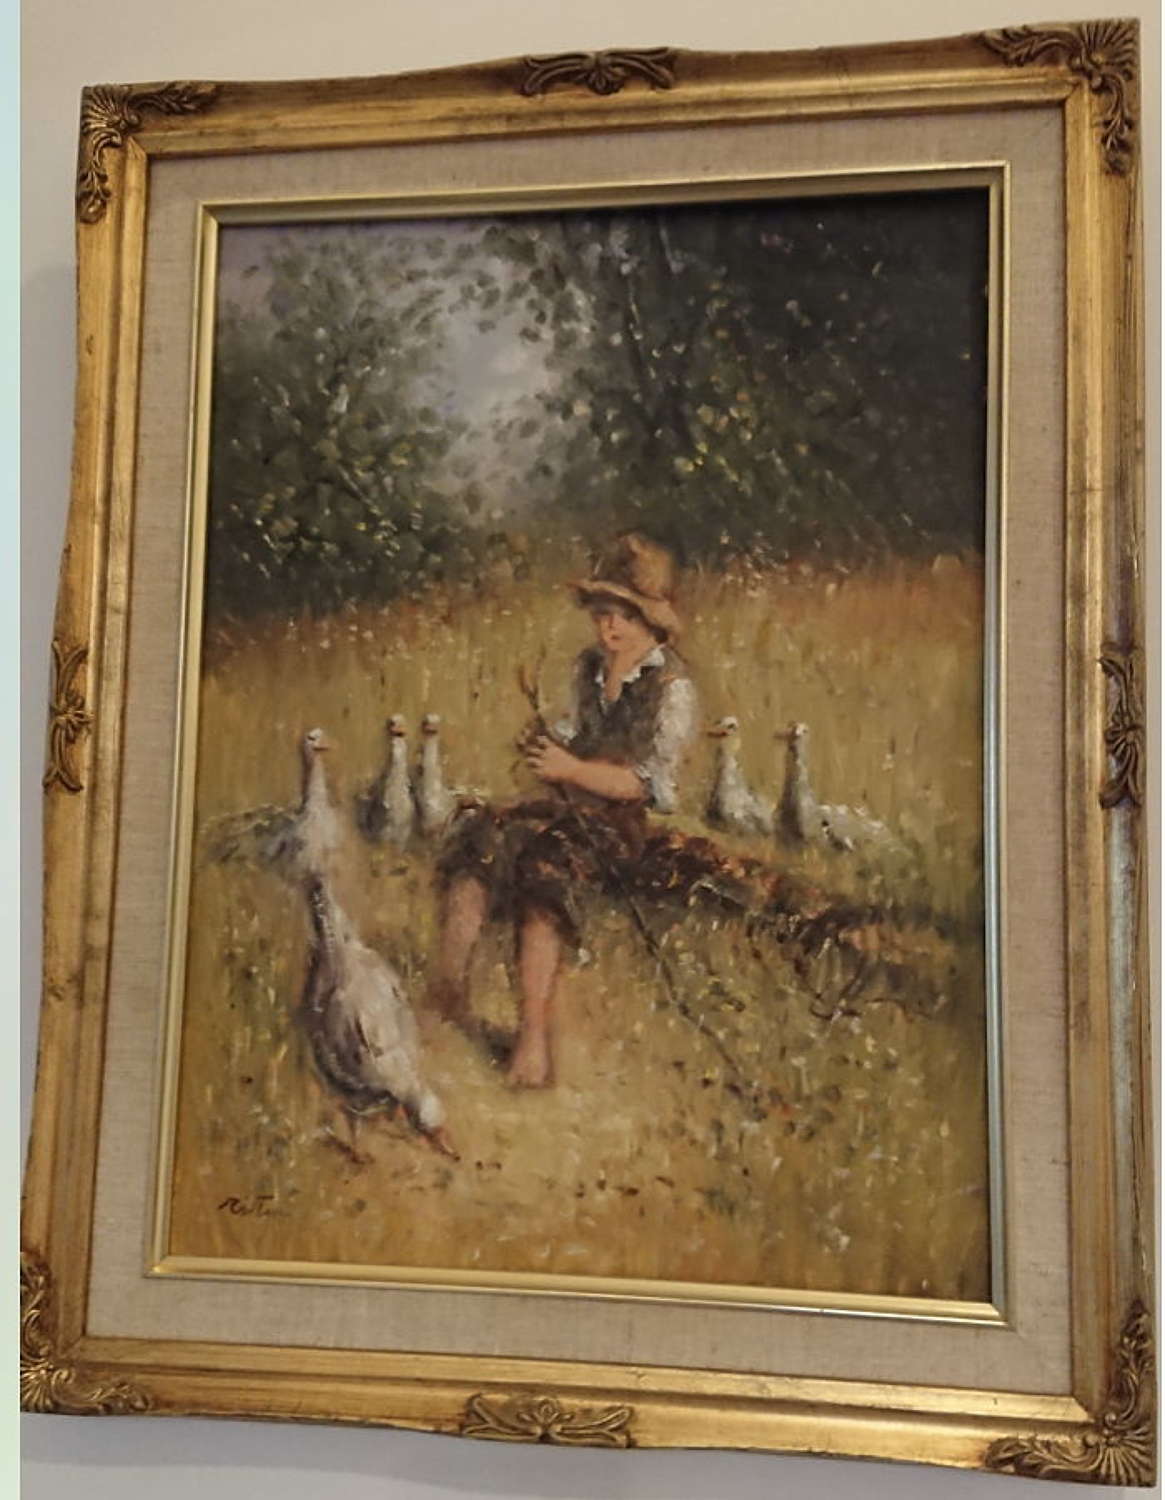 Laszlo Ritter - Boy with Ducks - Oil On Canvas